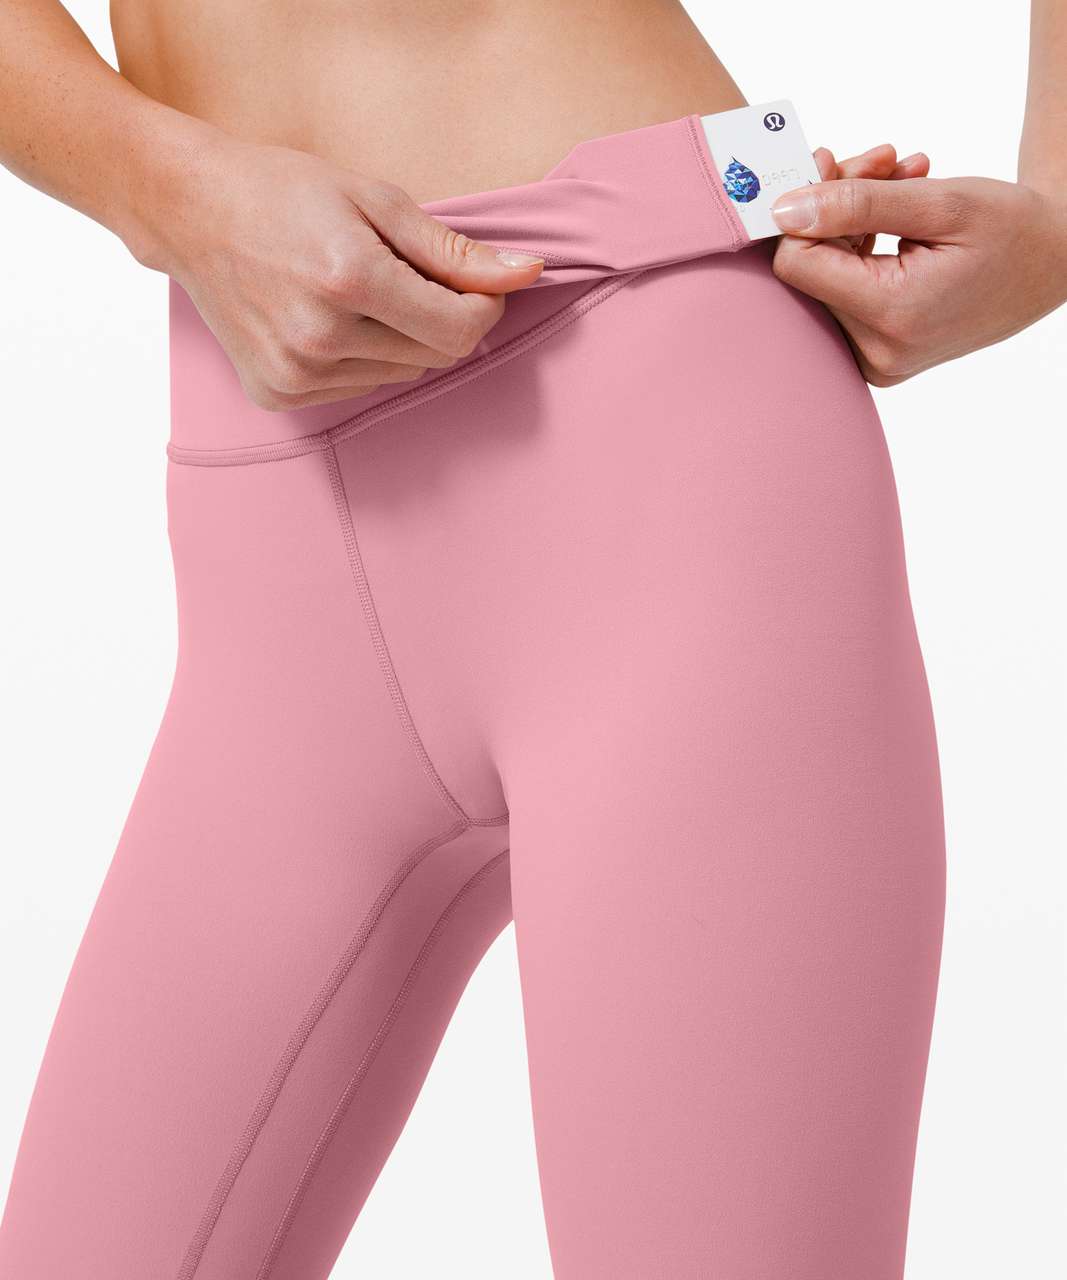 Lululemon Align Women's Size 4 PANT II 25 Guava Pink leggings NEW